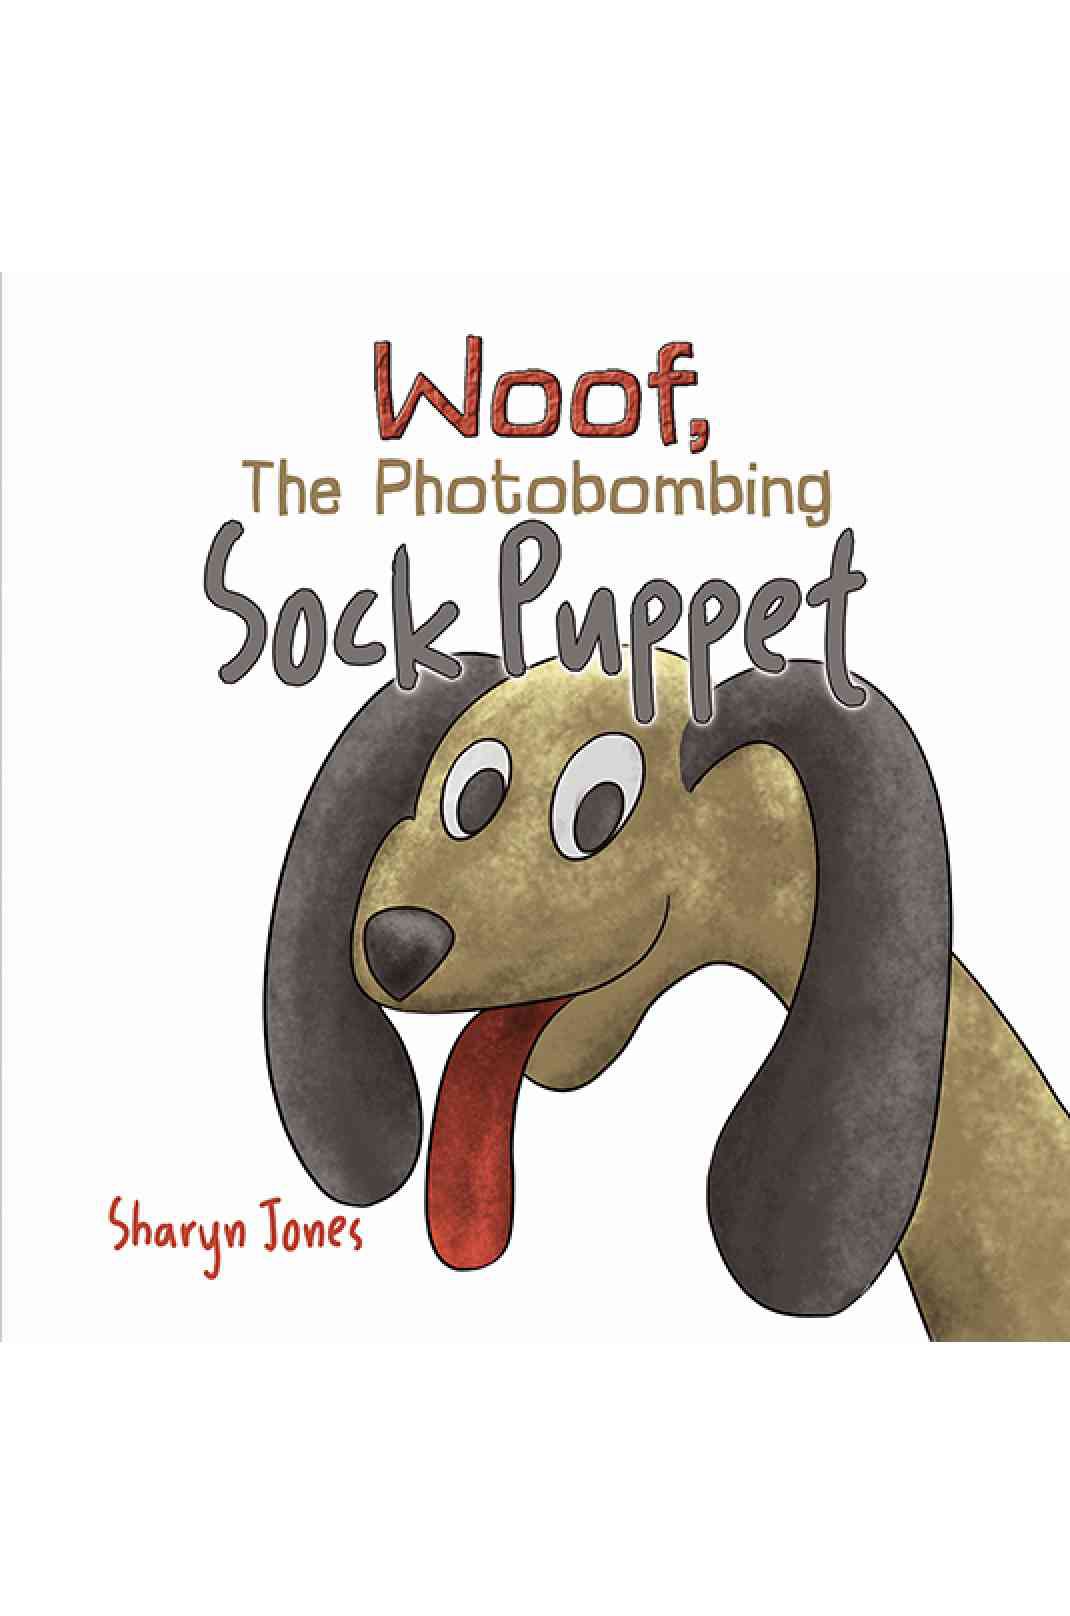 Sharyn Jones author of ‘Woof, the photobombing sock puppet’ featured on the New Zealand Herald website